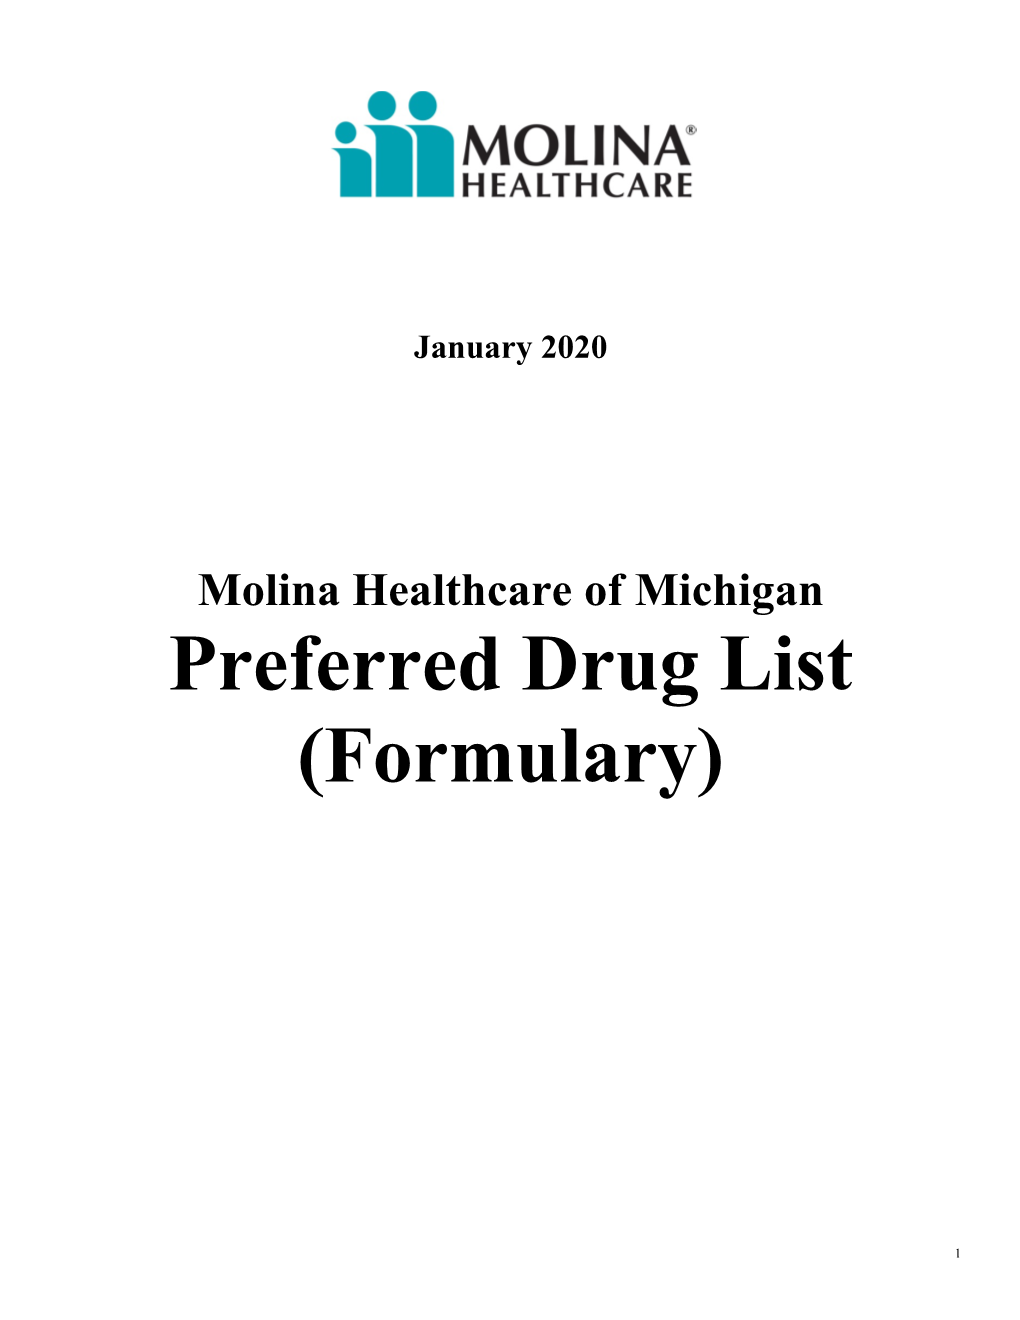 Preferred Drug List (Formulary)